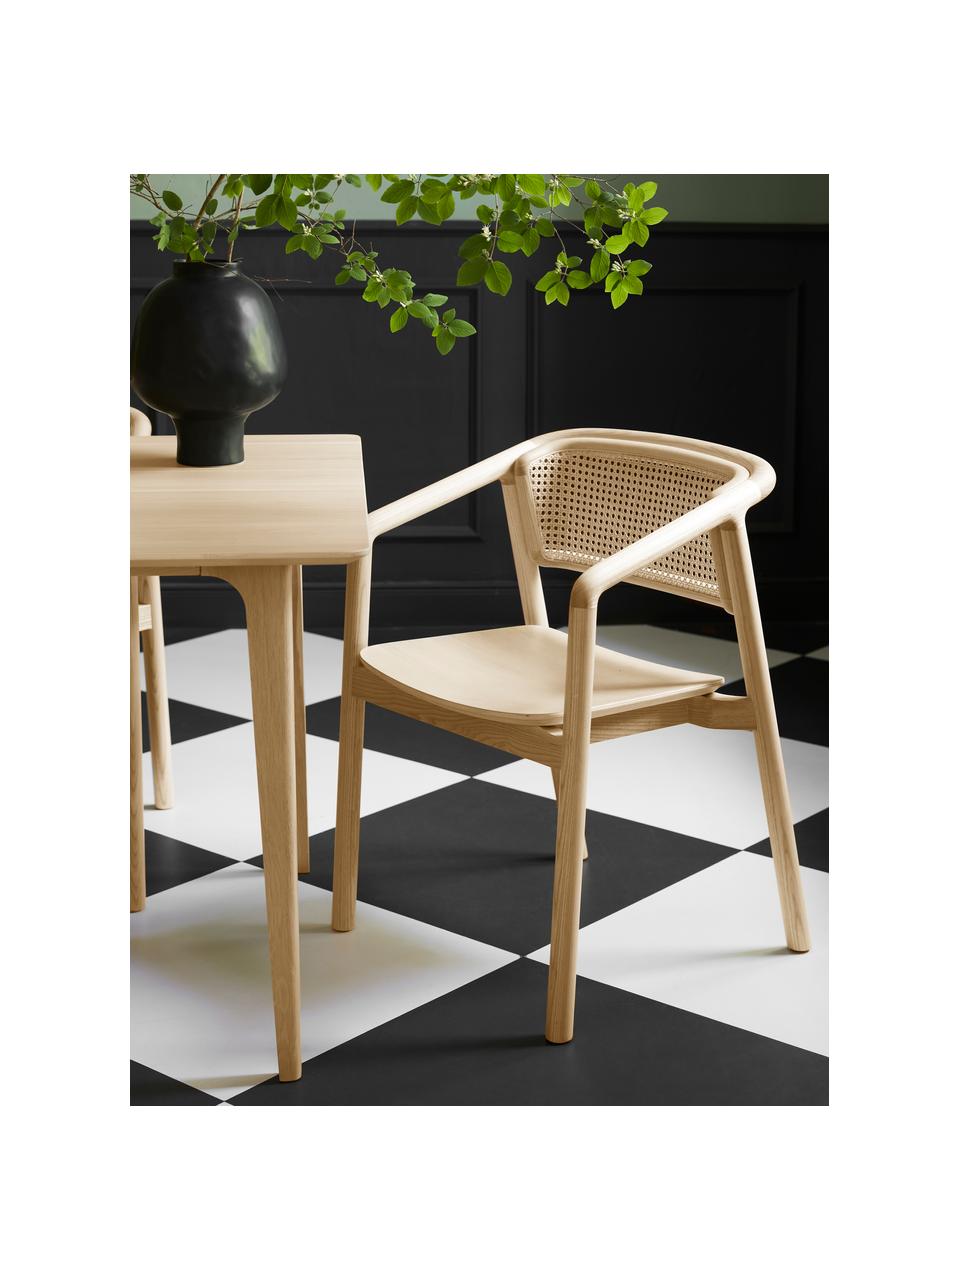 Židle s područkami a vídeňskou pleteninou Gali, Jasanové dřevo, Š 56 cm, H 55 cm